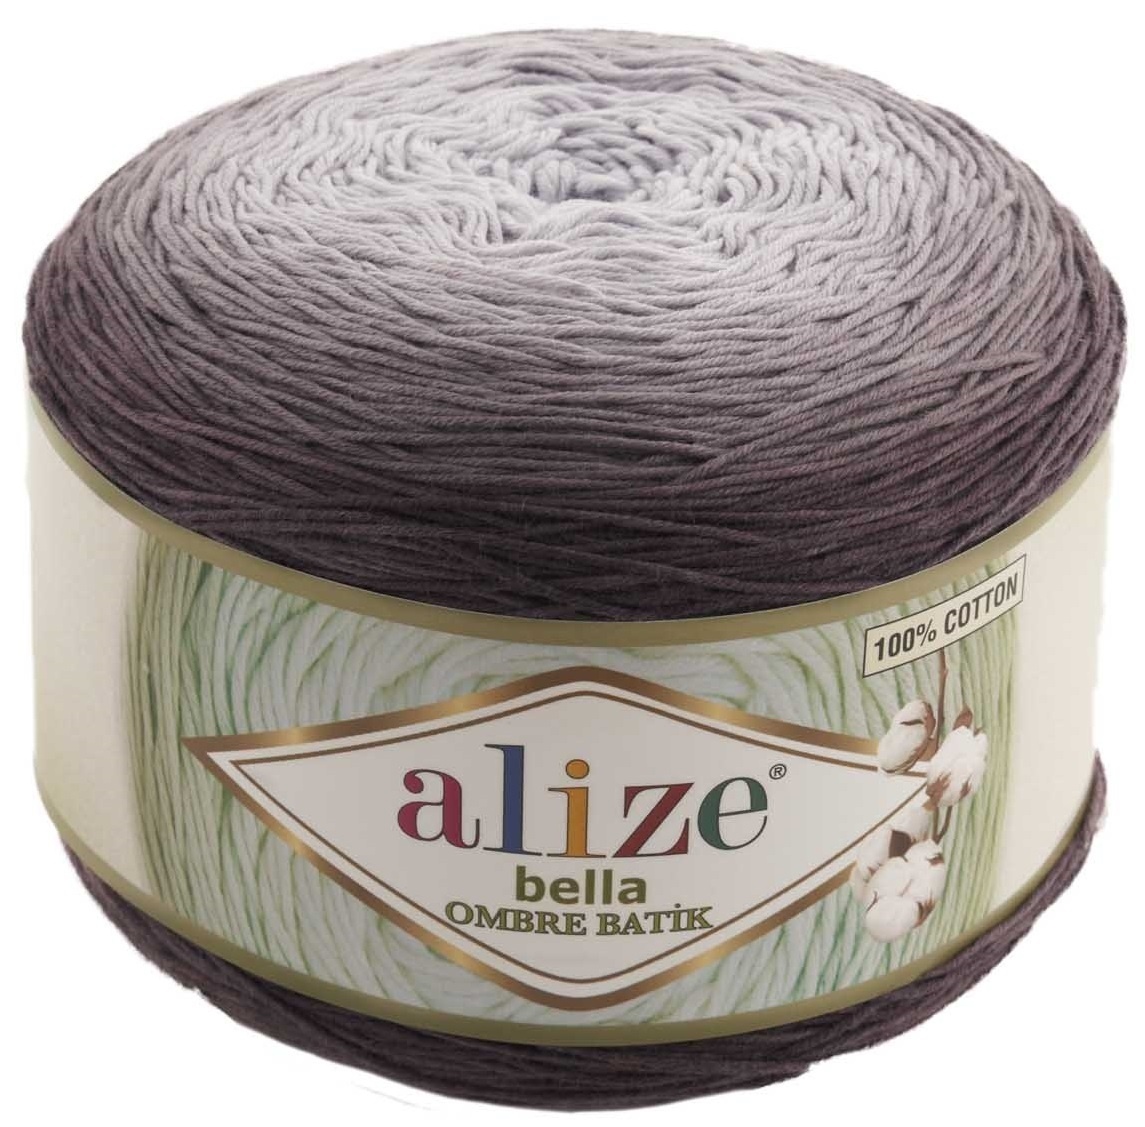 Alize Bella Ombre Batik 100% cotton, 2 Skein Value Pack, 500g фото 10